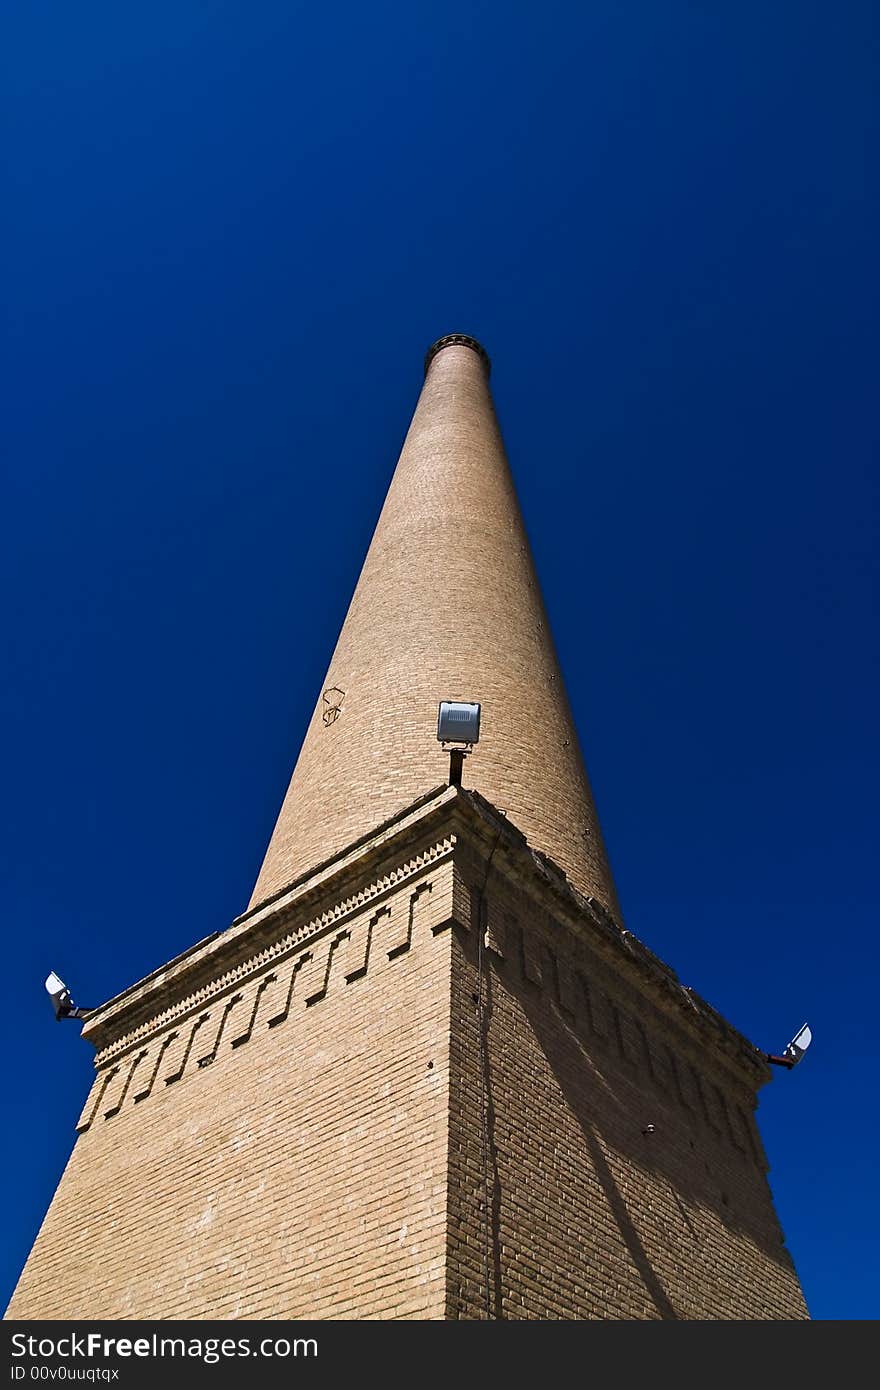 Industrial era lighthouse built by bricks